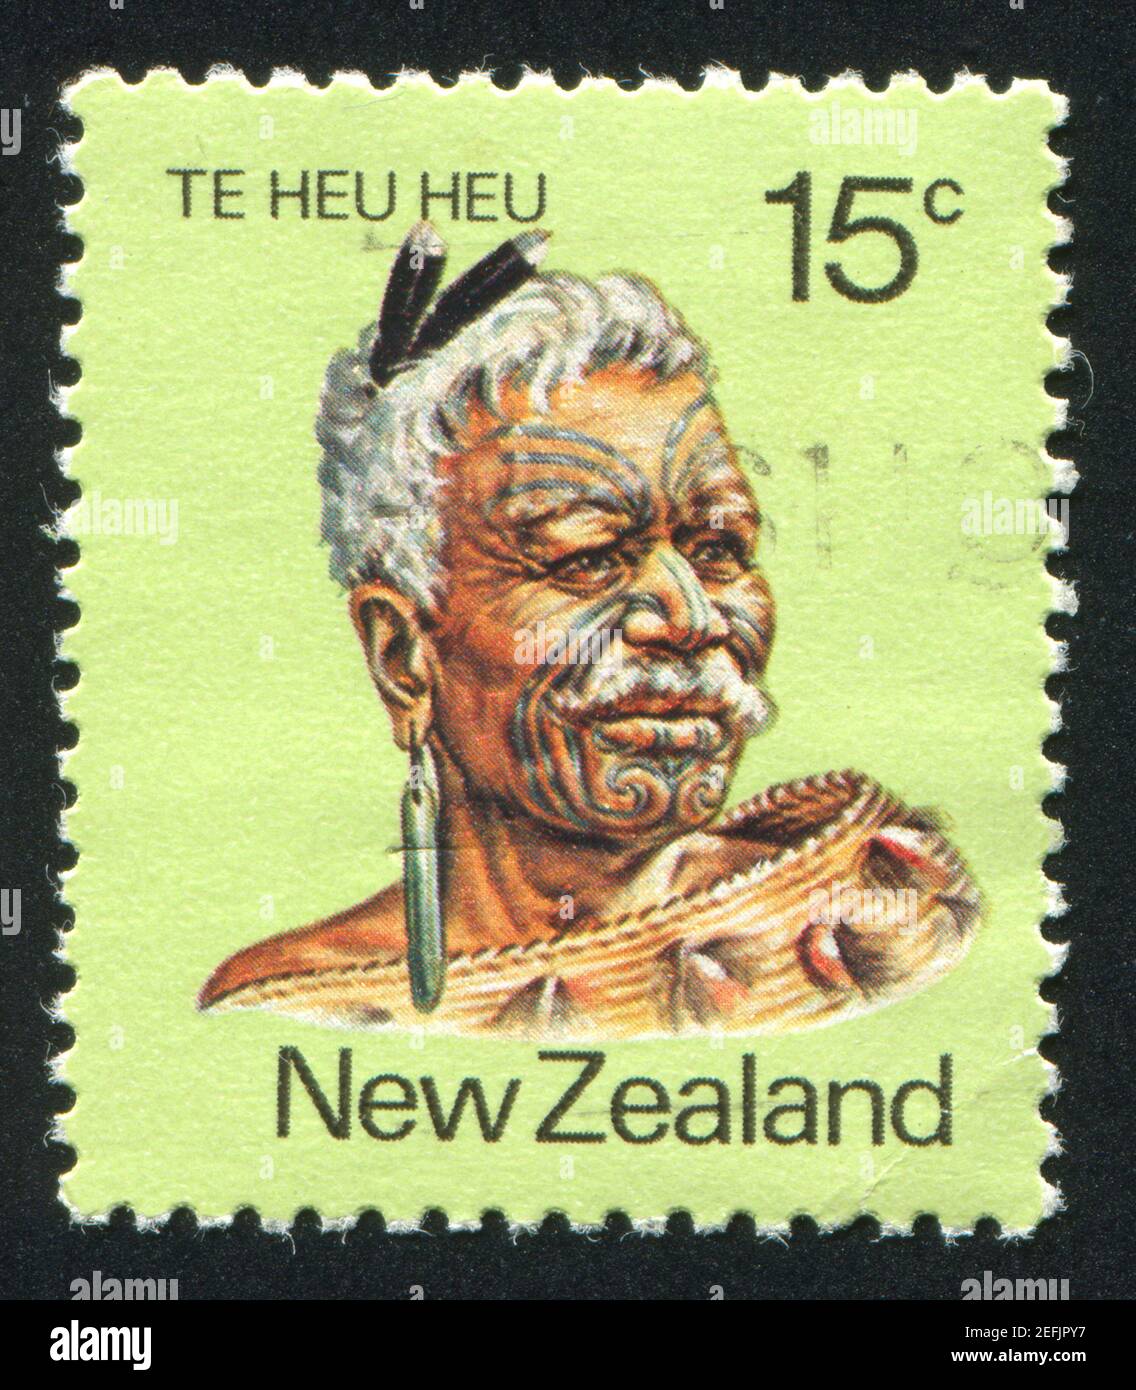 NEW ZEALAND - CIRCA 1980: stamp printed by New Zealand, shows Maori Leader Te Heu Heu Tukino IV, circa 1980 Stock Photo